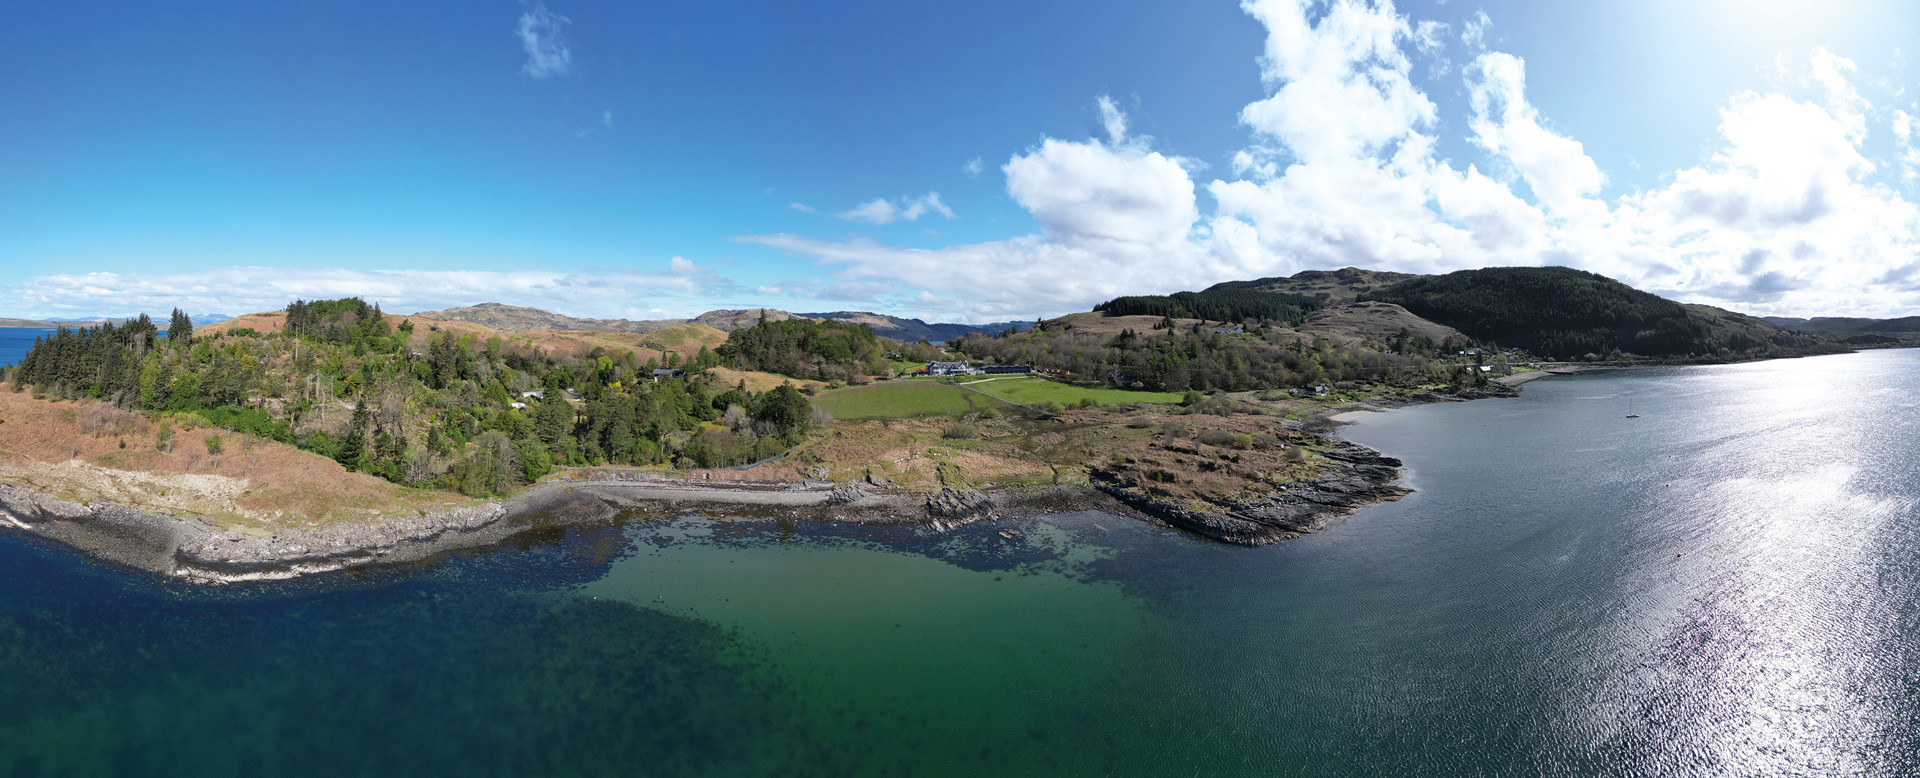 Background image - Drone Panorama Coastline.jpg